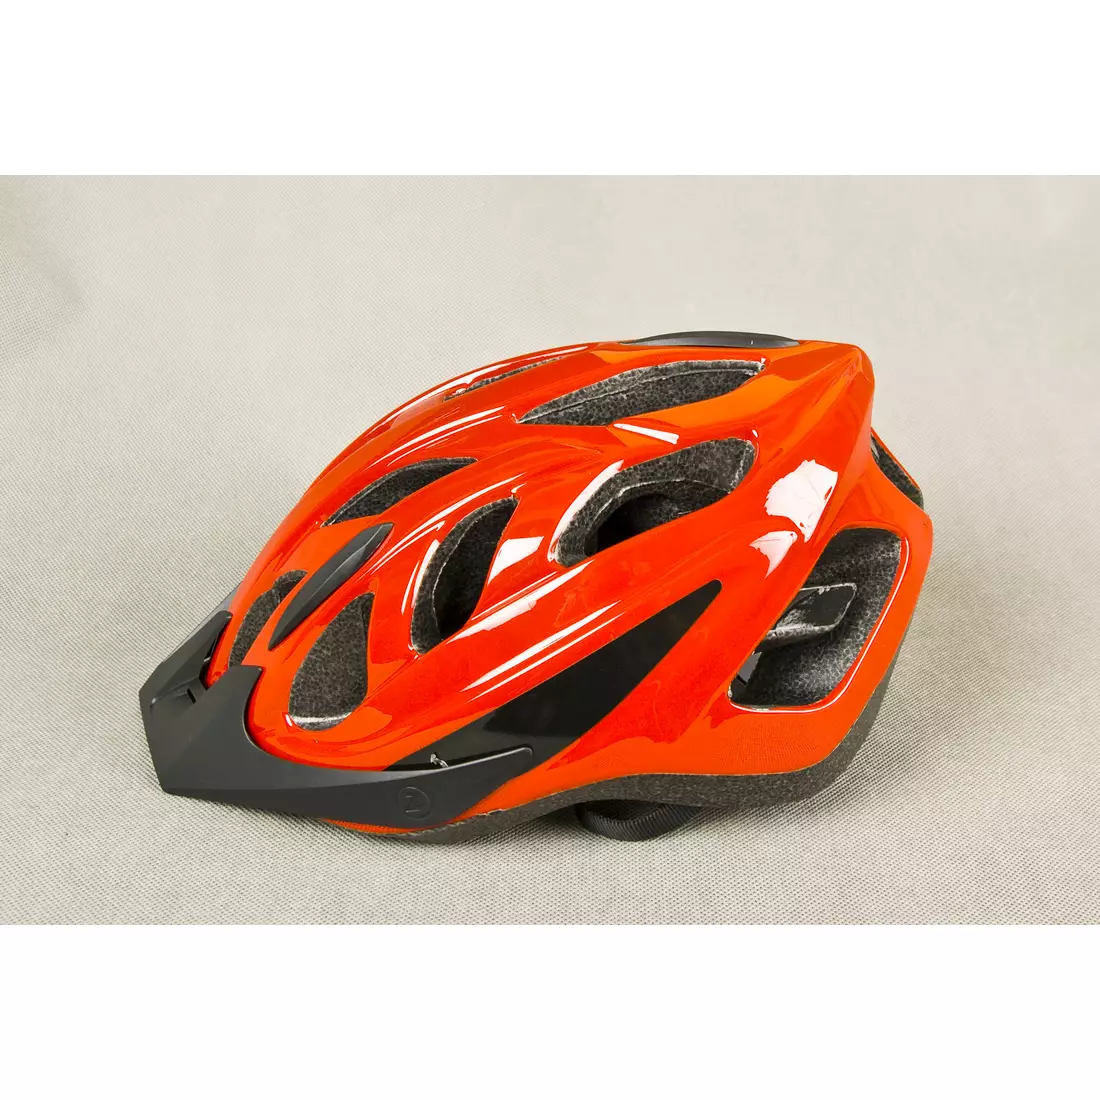 LAZER - CYCLONE MTB bicycle helmet, color: red